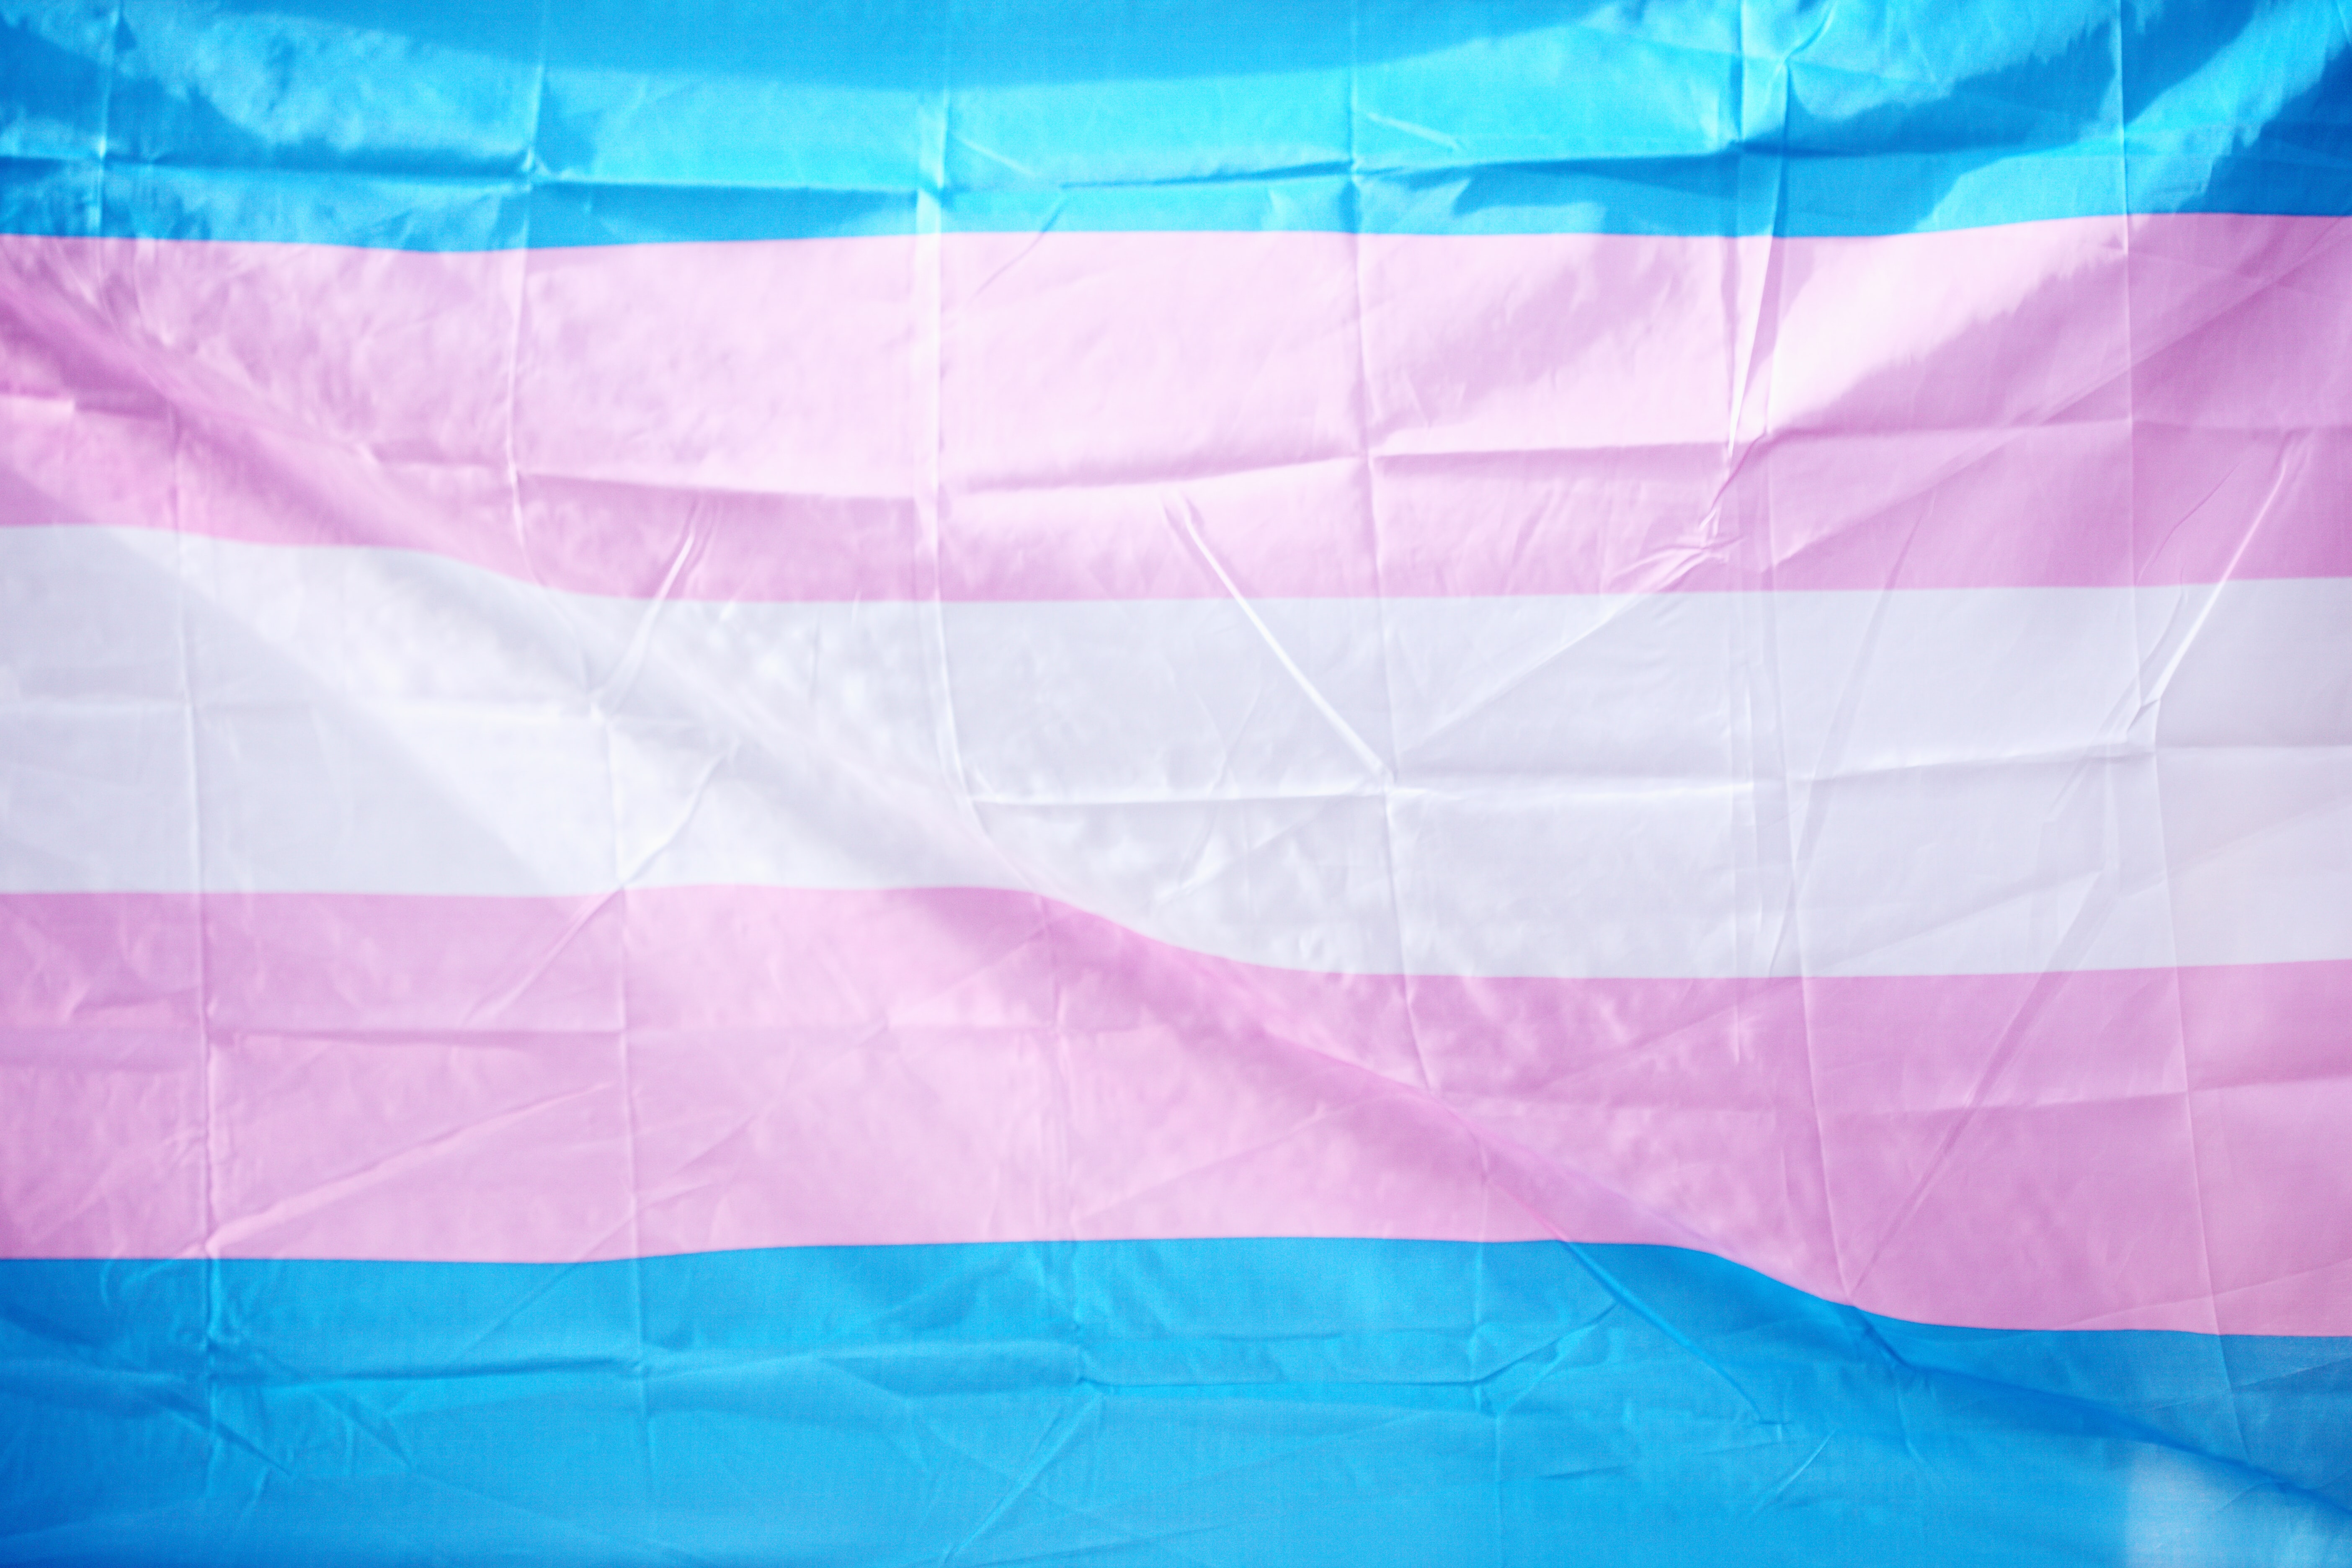 An image depicting the transgender flag. Courtesy Sharon McCutcheon.